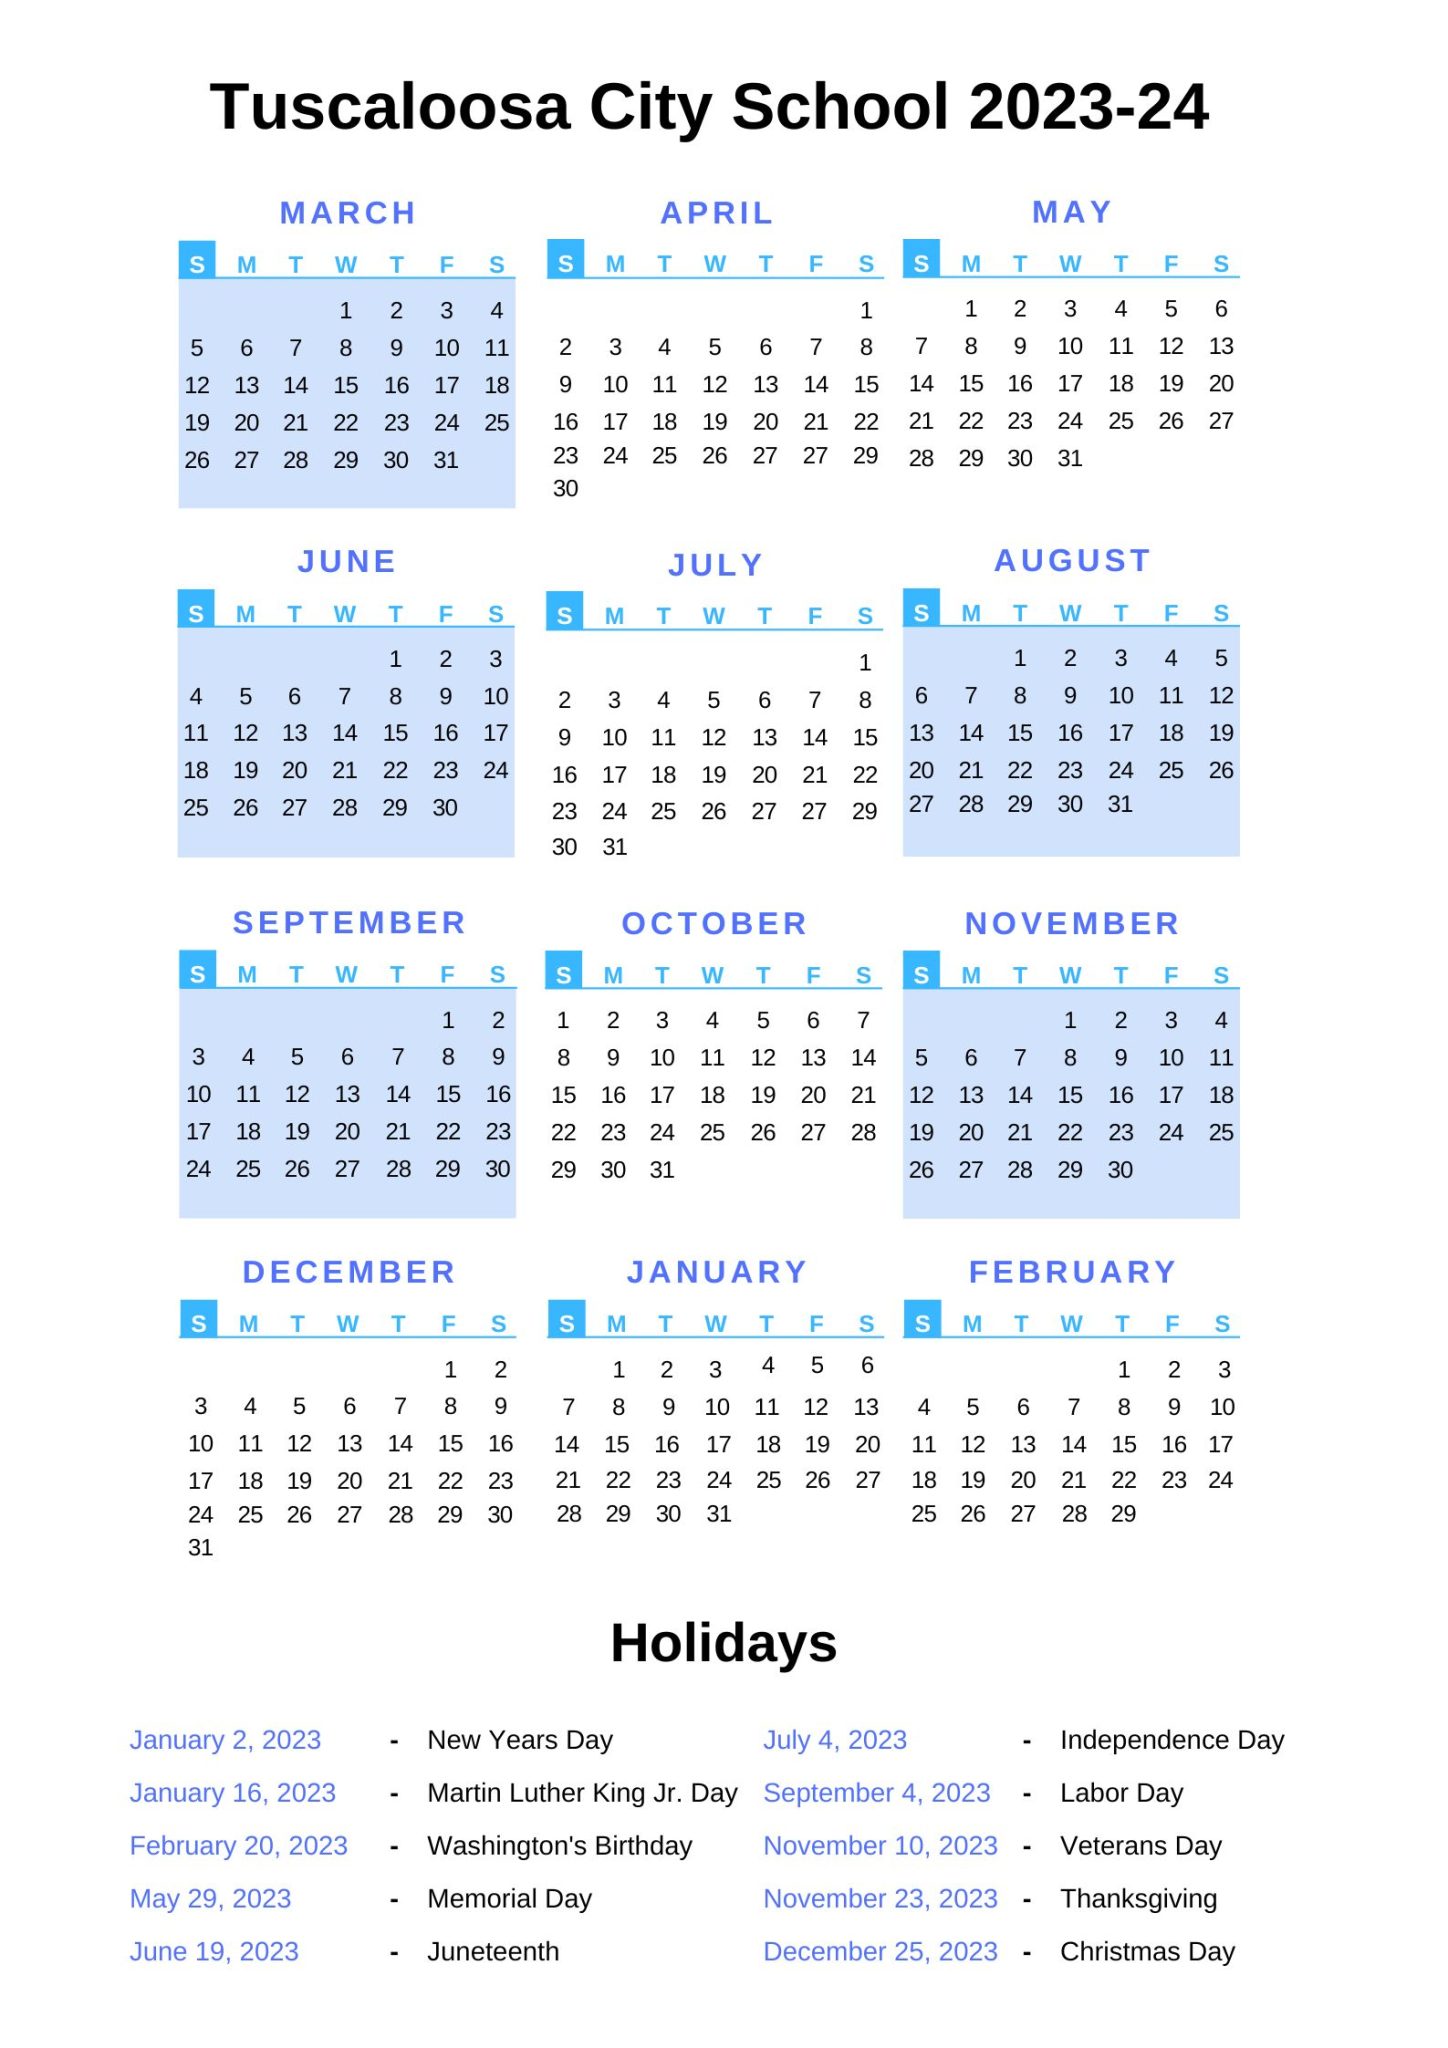 Tuscaloosa City Schools Calendar 2023 24 With Holidays